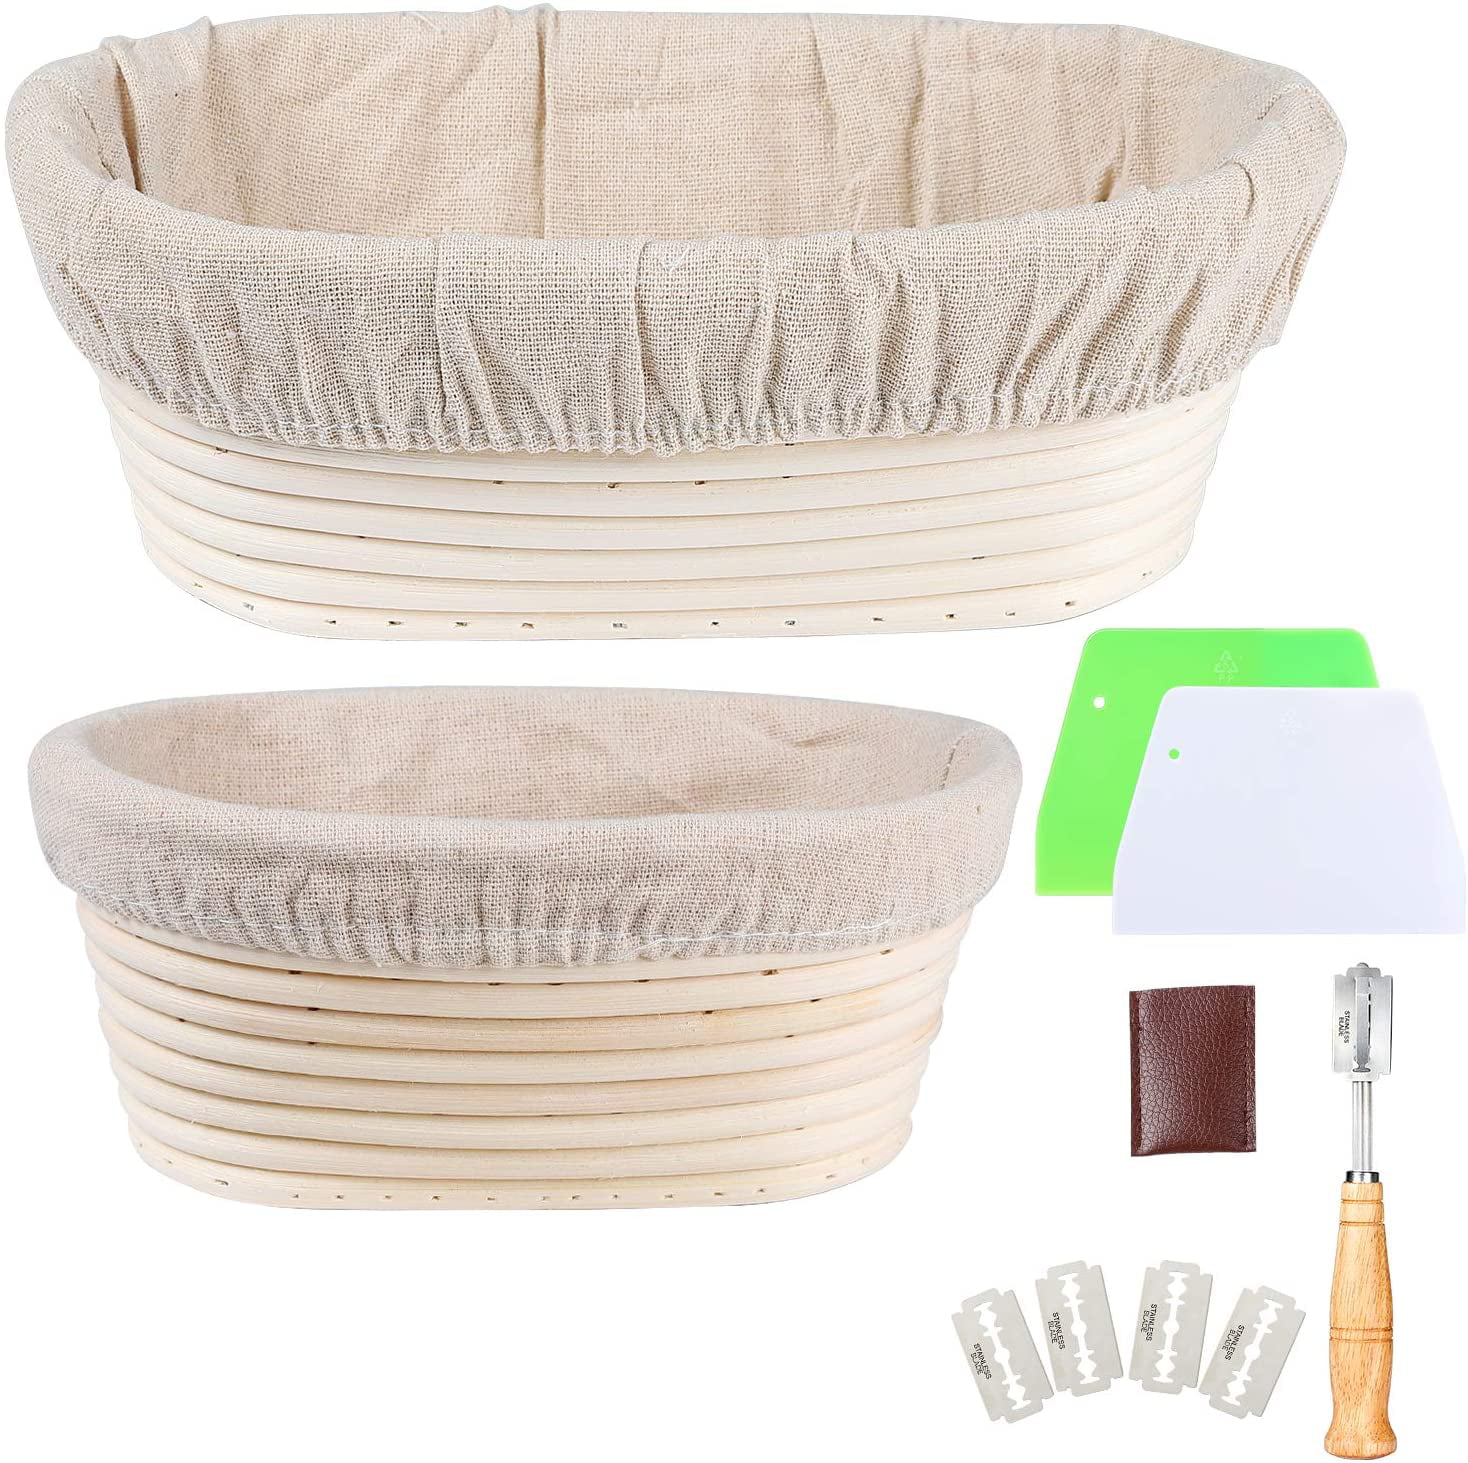 2x Oval Bread Proofing Proving Basket Rattan Banneton Brotform Dough Baskets Kit 